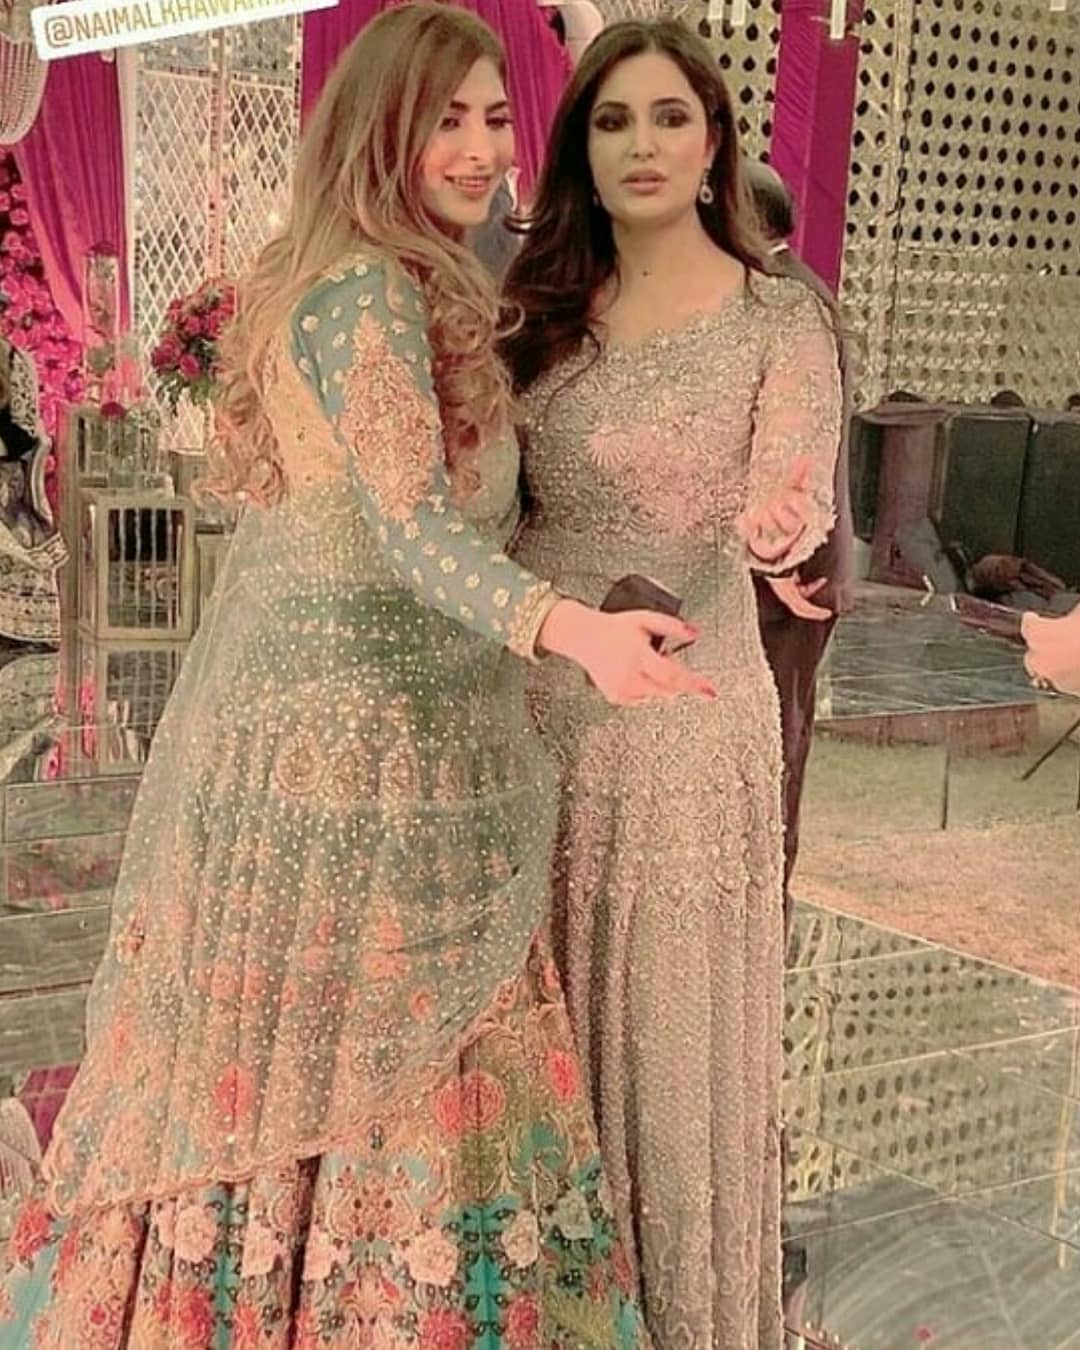 Naimal Khawar Sister Fiza Khawar Wedding Pictures